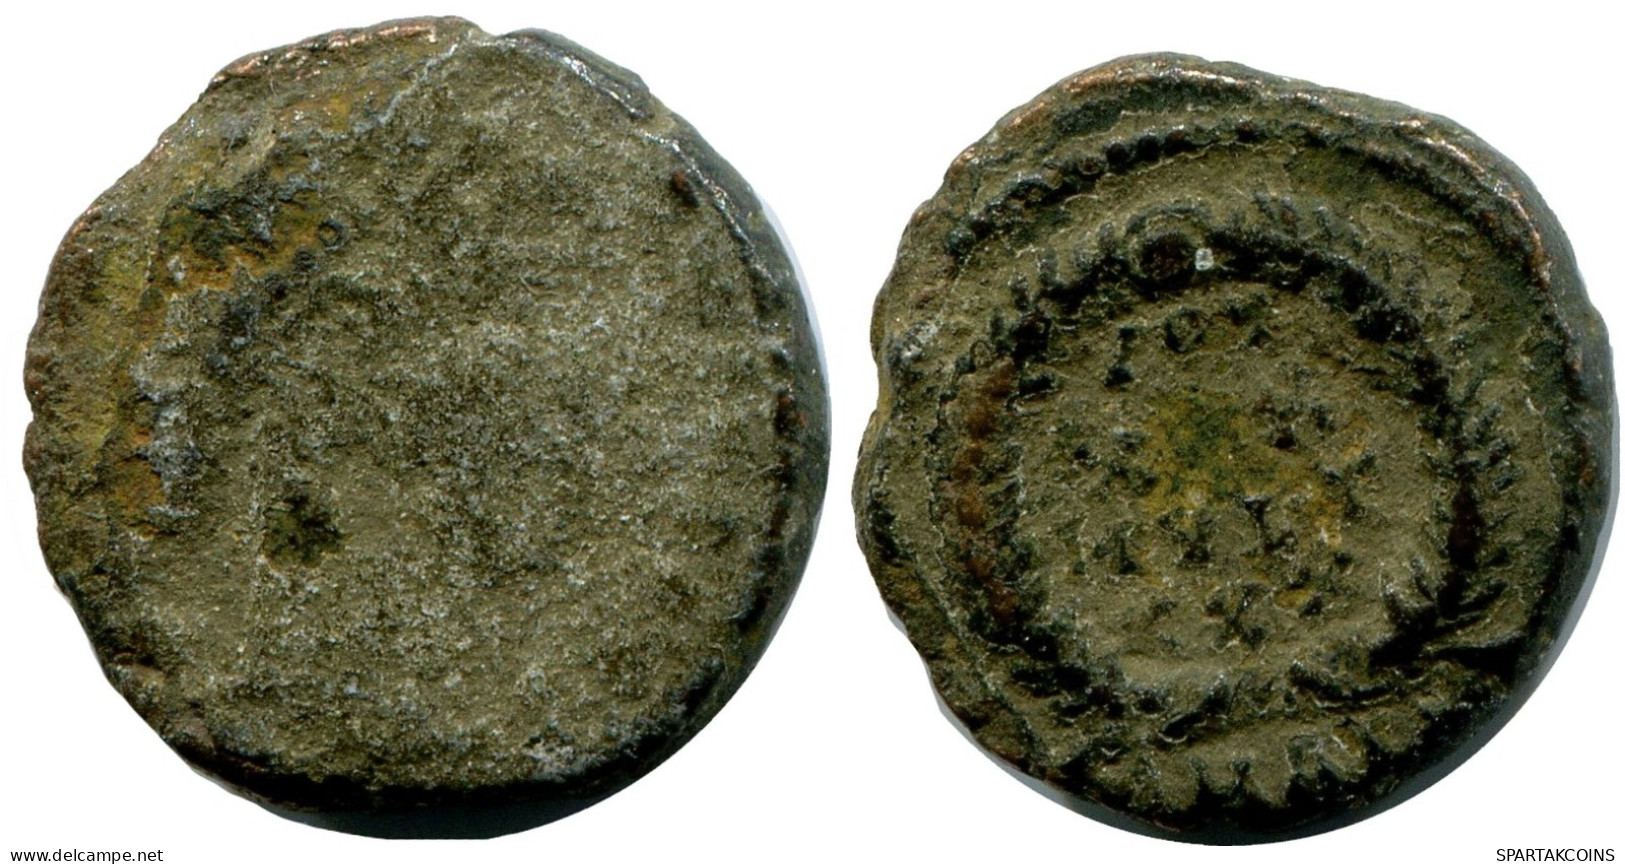 ROMAN Moneda MINTED IN ALEKSANDRIA FROM THE ROYAL ONTARIO MUSEUM #ANC10149.14.E.A - El Impero Christiano (307 / 363)